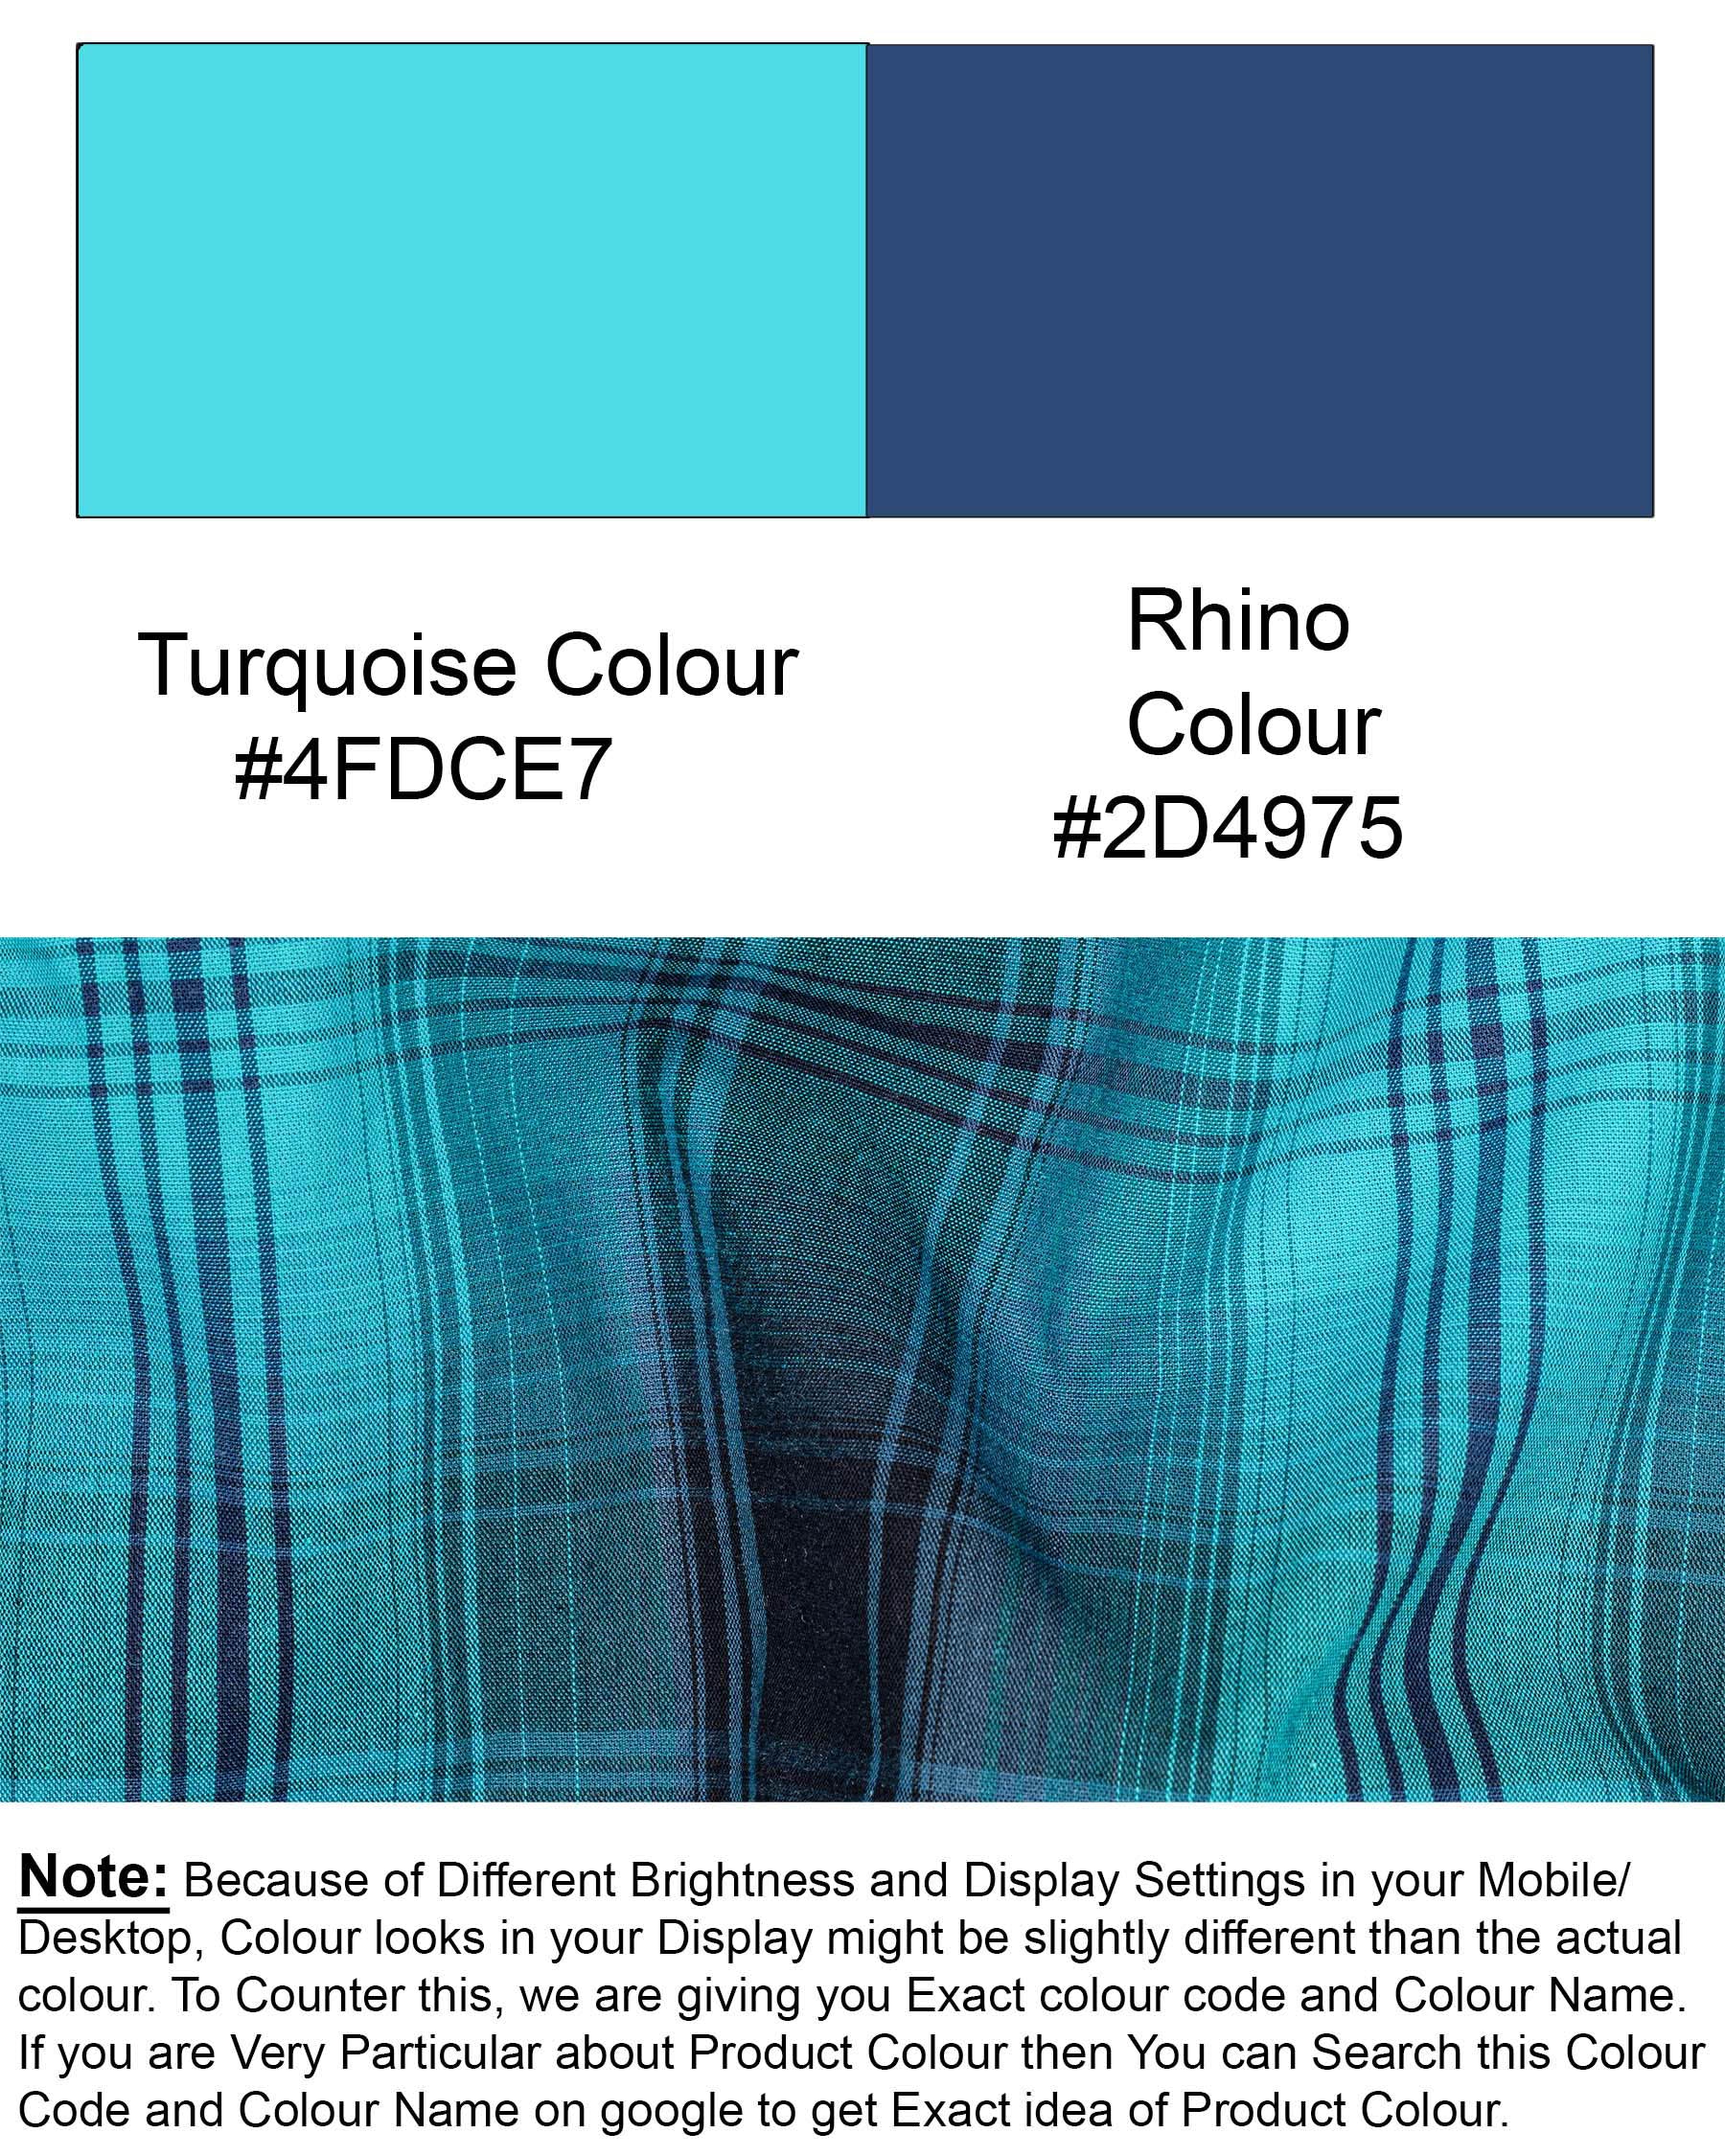 Turquoise and Rhino Blue Plaid Premium Cotton Shirt 6678,6679-BD-H-38,6679-BD-39,6679-BD-H-39,6679-BD-40,6679-BD-H-40,6679-BD-42,6679-BD-H-42,6679-BD-44,6679-BD-H-44,6679-BD-46,6679-BD-H-46,6679-BD-48,6679-BD-H-48,6679-BD-50,6679-BD-H-50,6679-BD-52,6679-BD-H-52